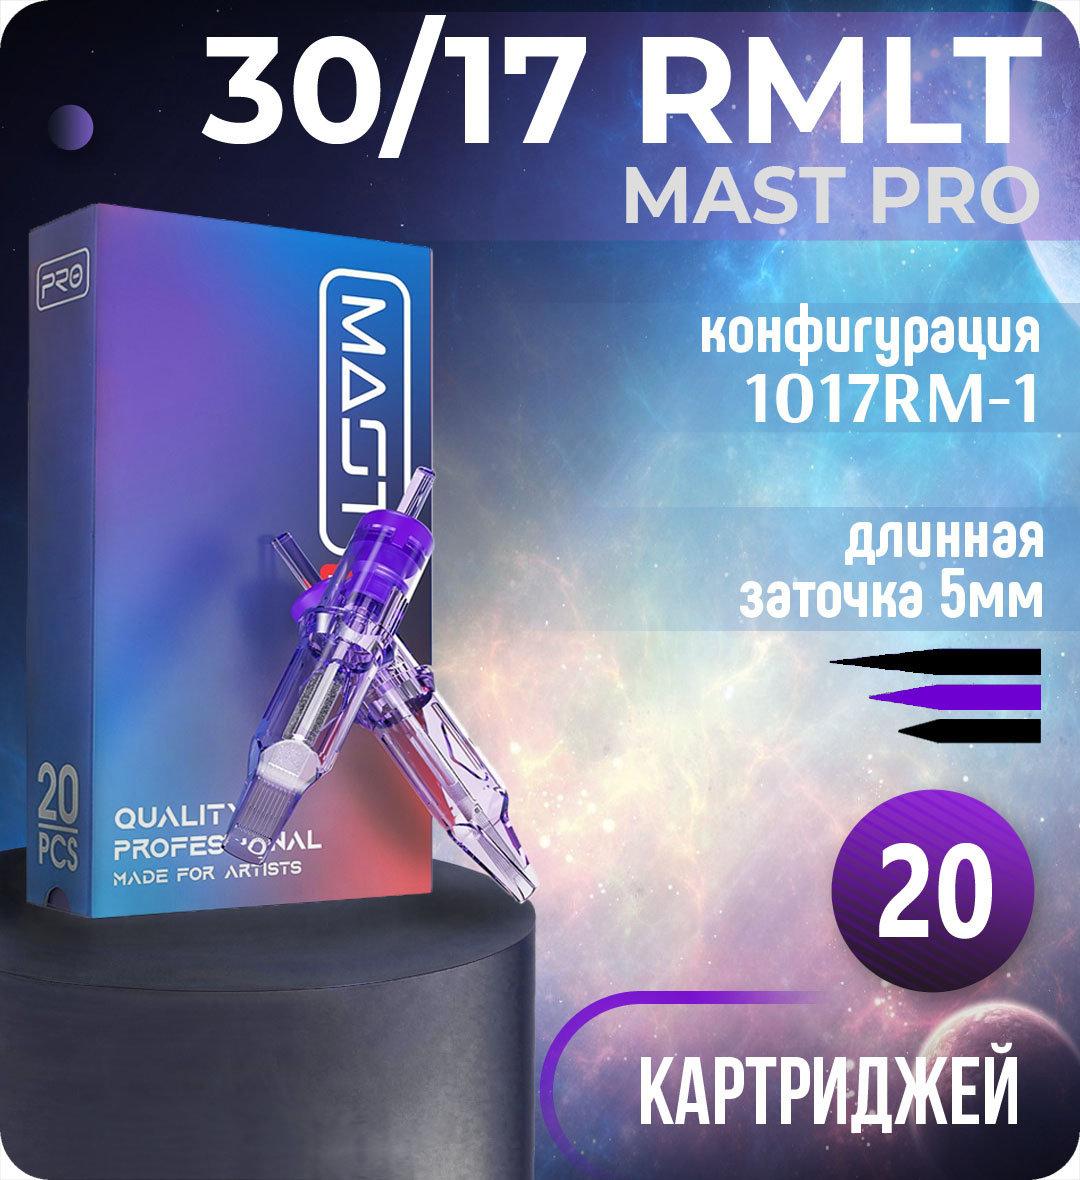 Картриджи Mast Pro 30/17 RMLT (1017RM-1) для тату, перманентного макияжа и татуажа Dragonhawk 20шт